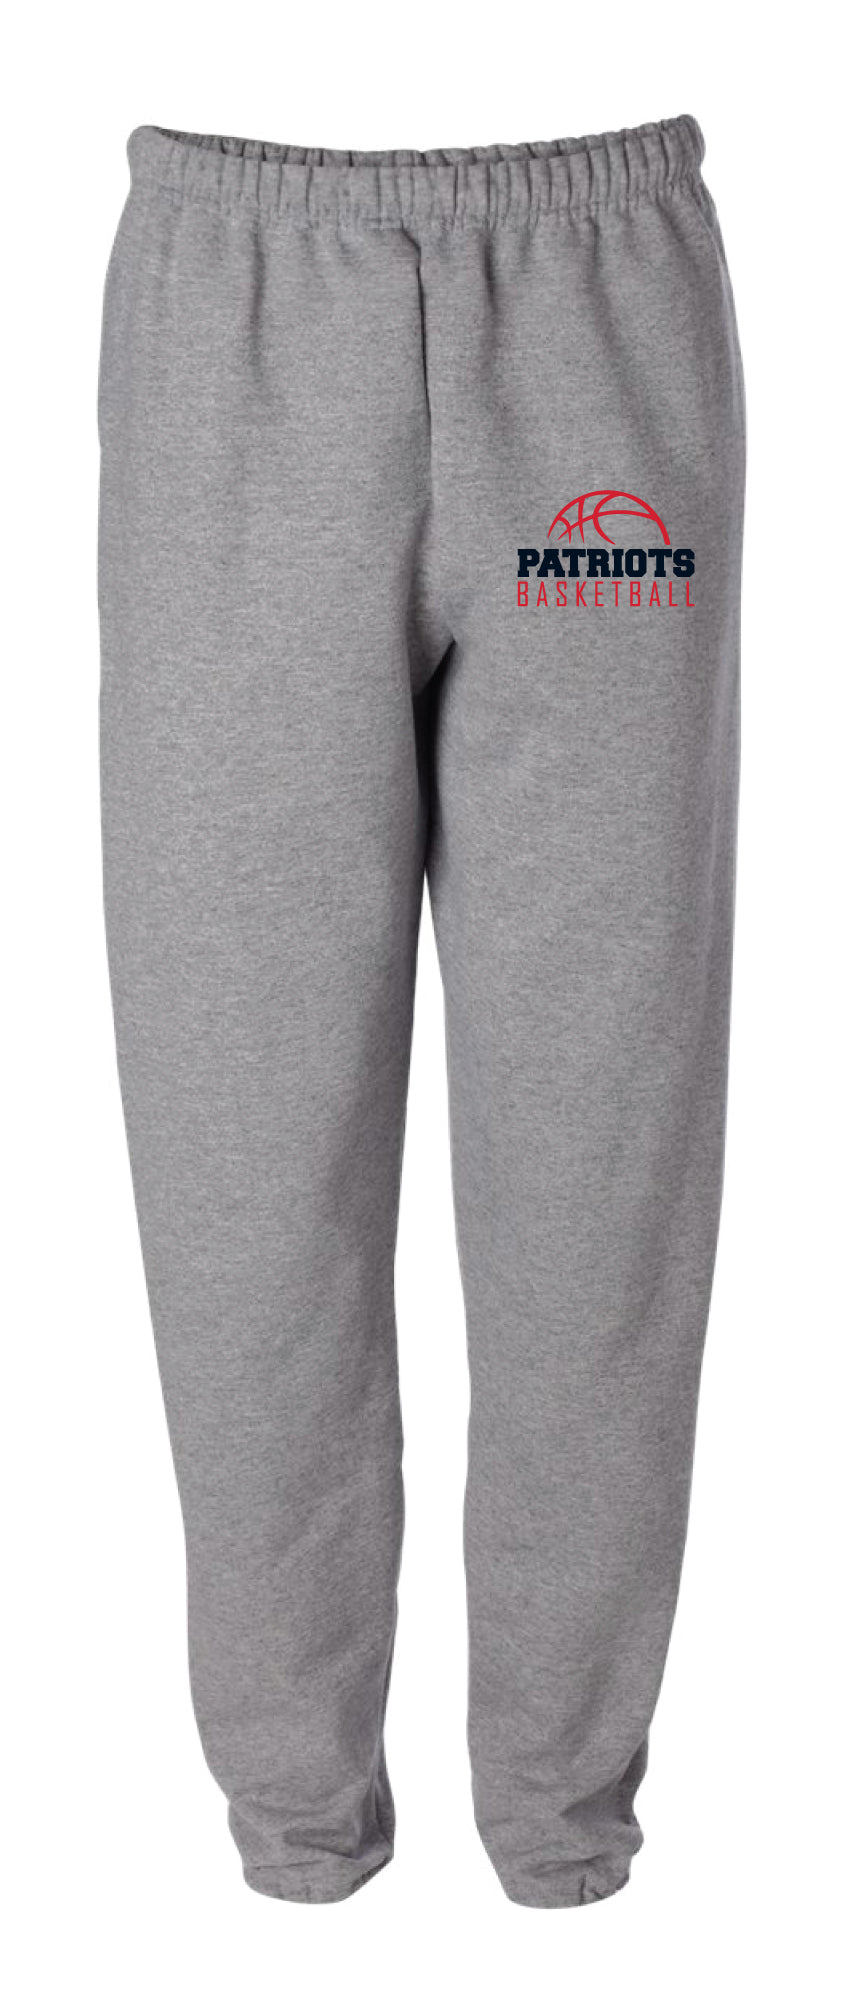 Secaucus Basketball Cotton Sweatpants - Heather Grey - 5KounT2018